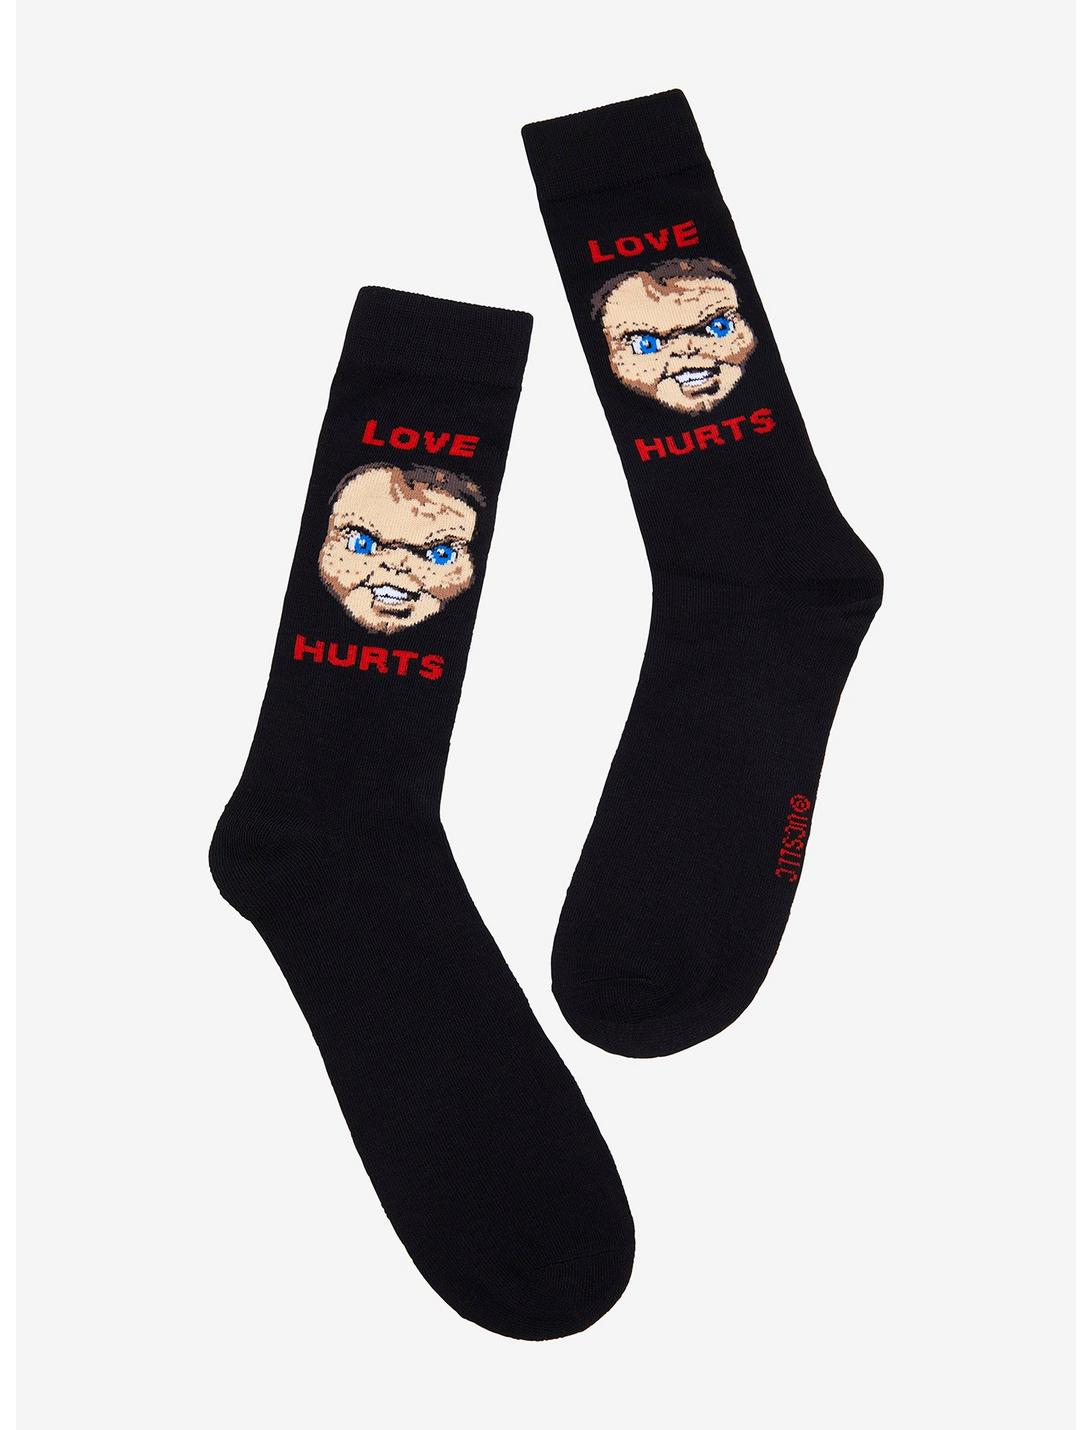 Chucky Love Hurts Crew Socks, , hi-res